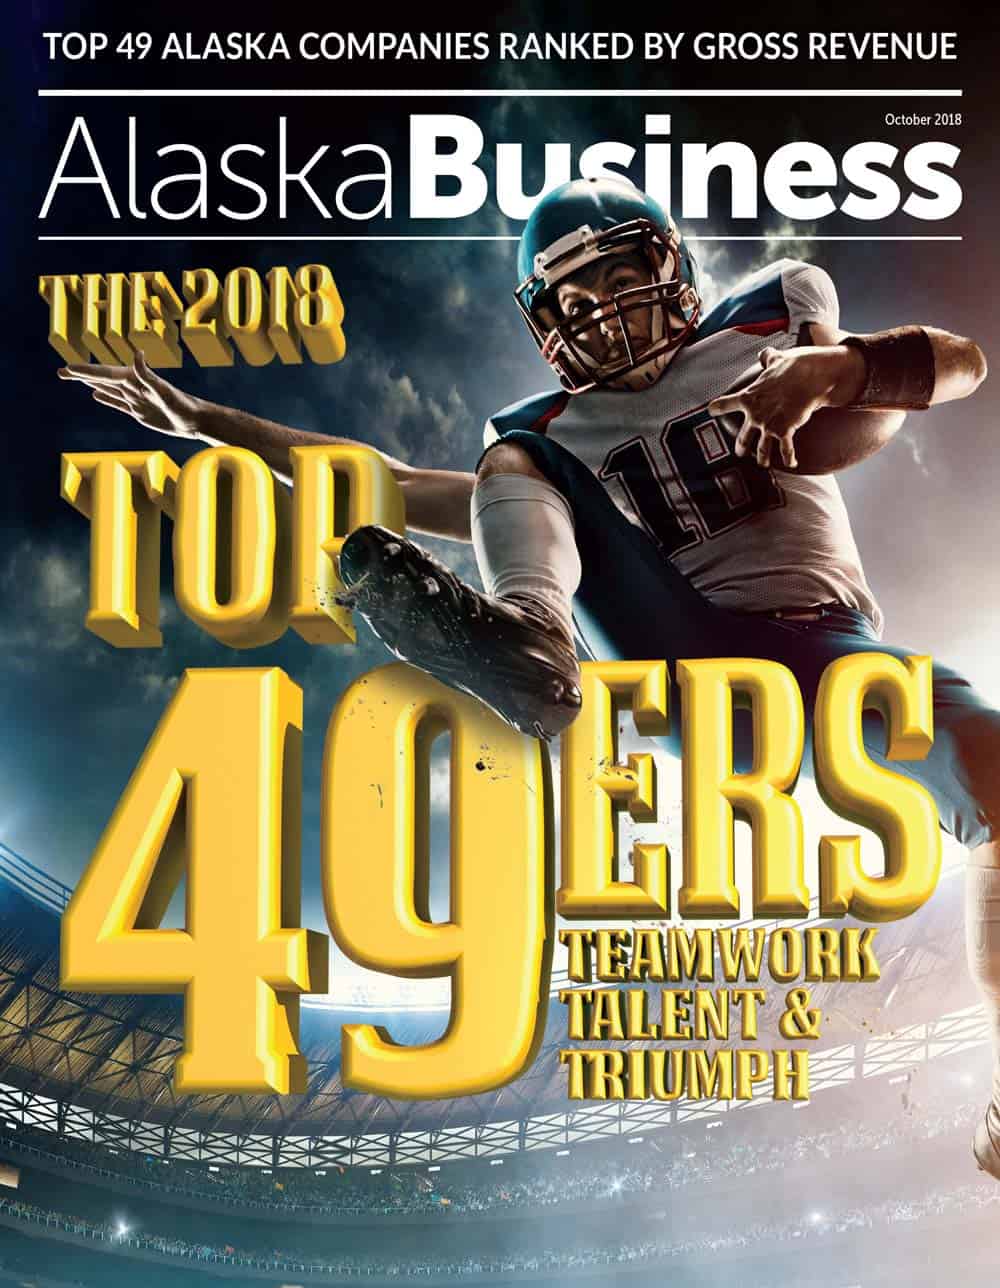 Alaska Business Magazine October 2018 cover